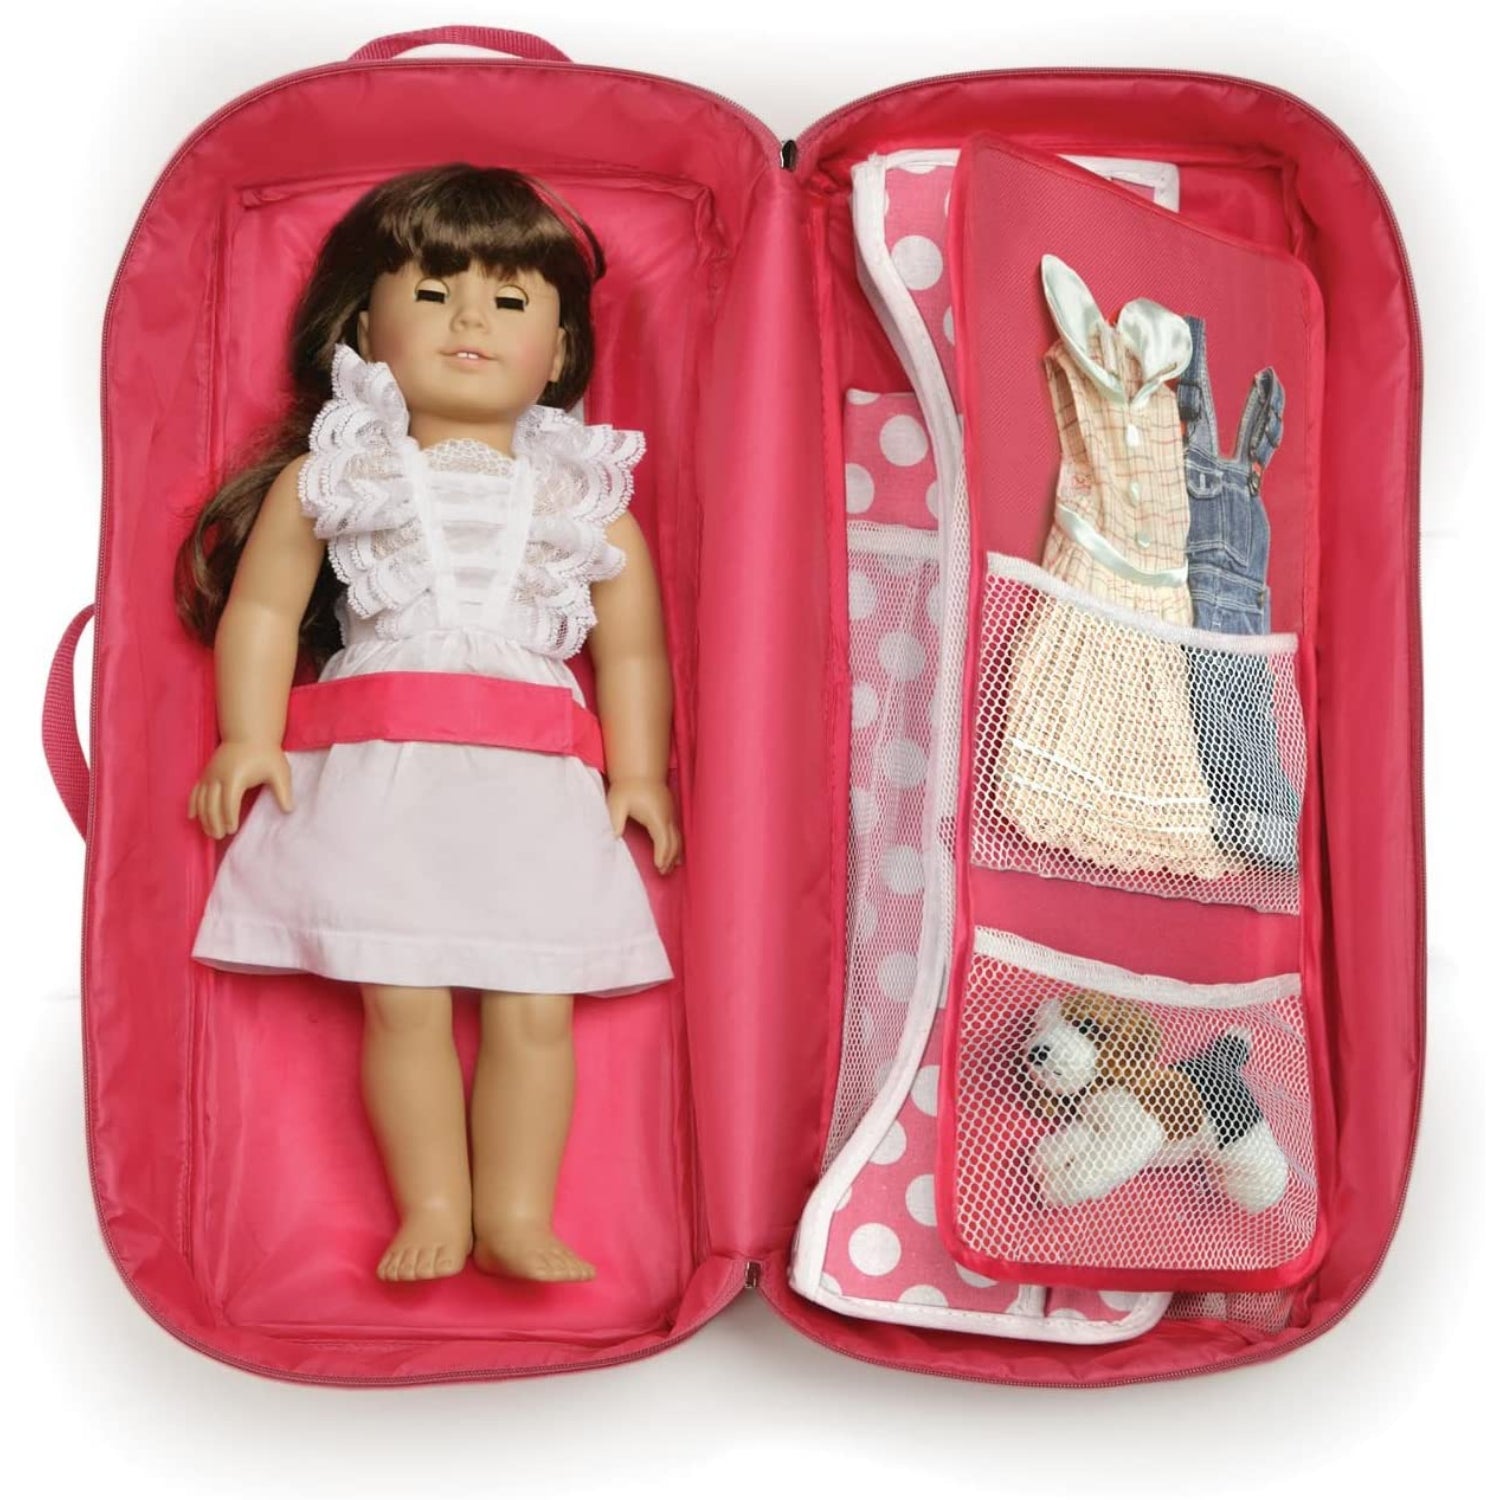 Badger Basket Doll Travel Case with Bed and Bedding - Dark Pink (fits 18'' Dolls)